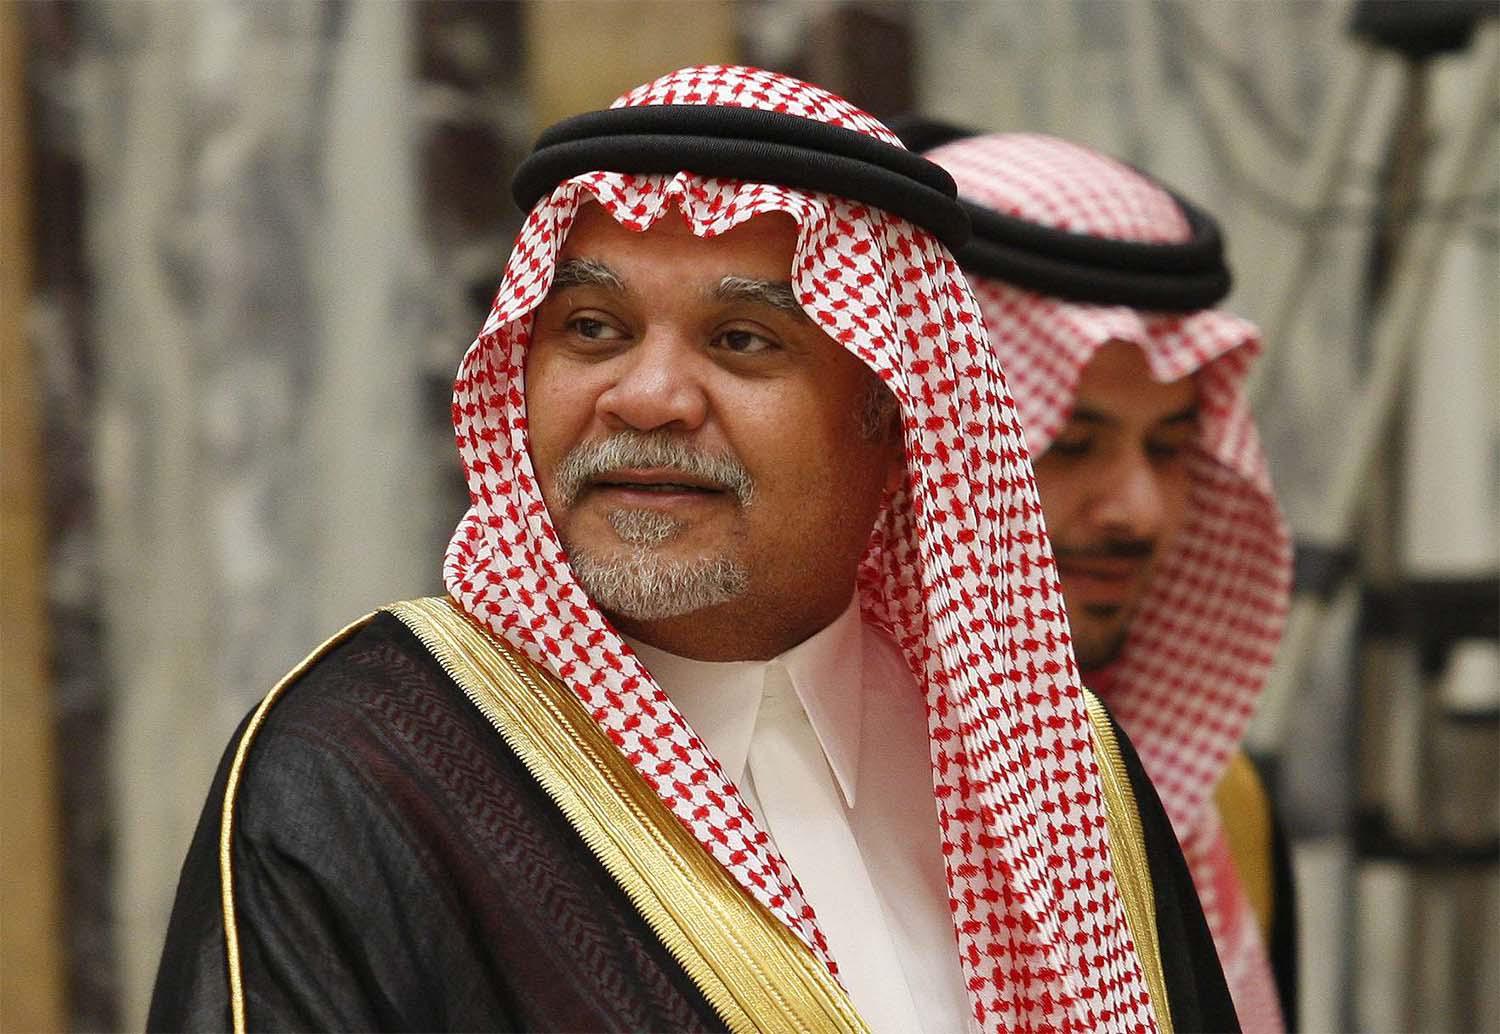 Saudi Arabia's former intelligence chief and ambassador to the United States, Prince Bandar bin Sultan bin Abdulaziz